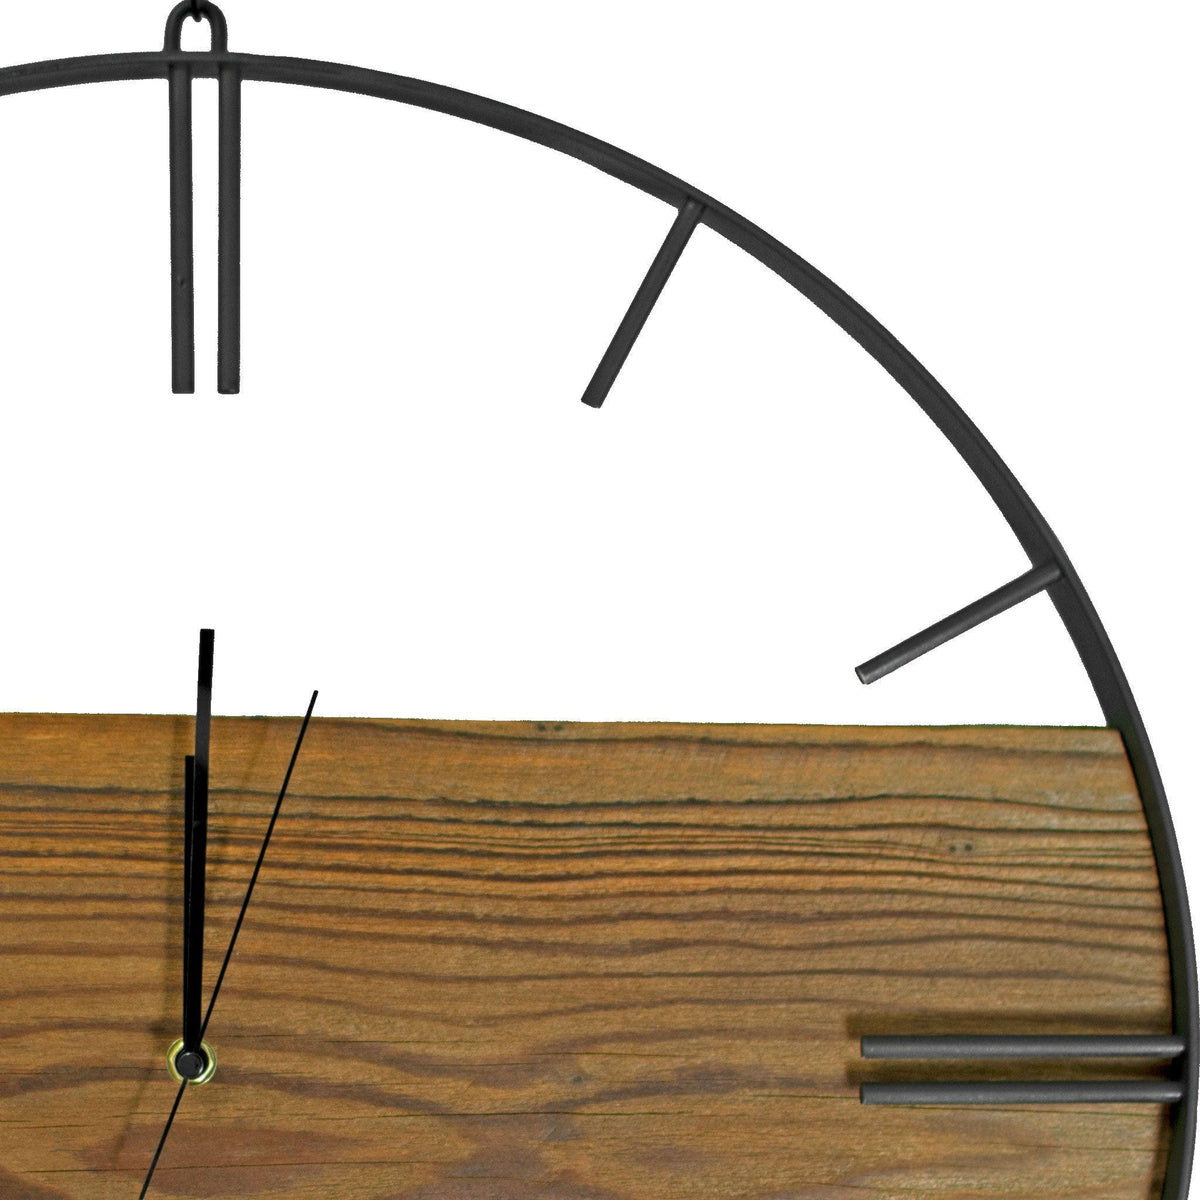 Introducing Lee Display's brand new Panchali Wall Clock with Live Edge Redwood Slab on sale at leedisplay.com